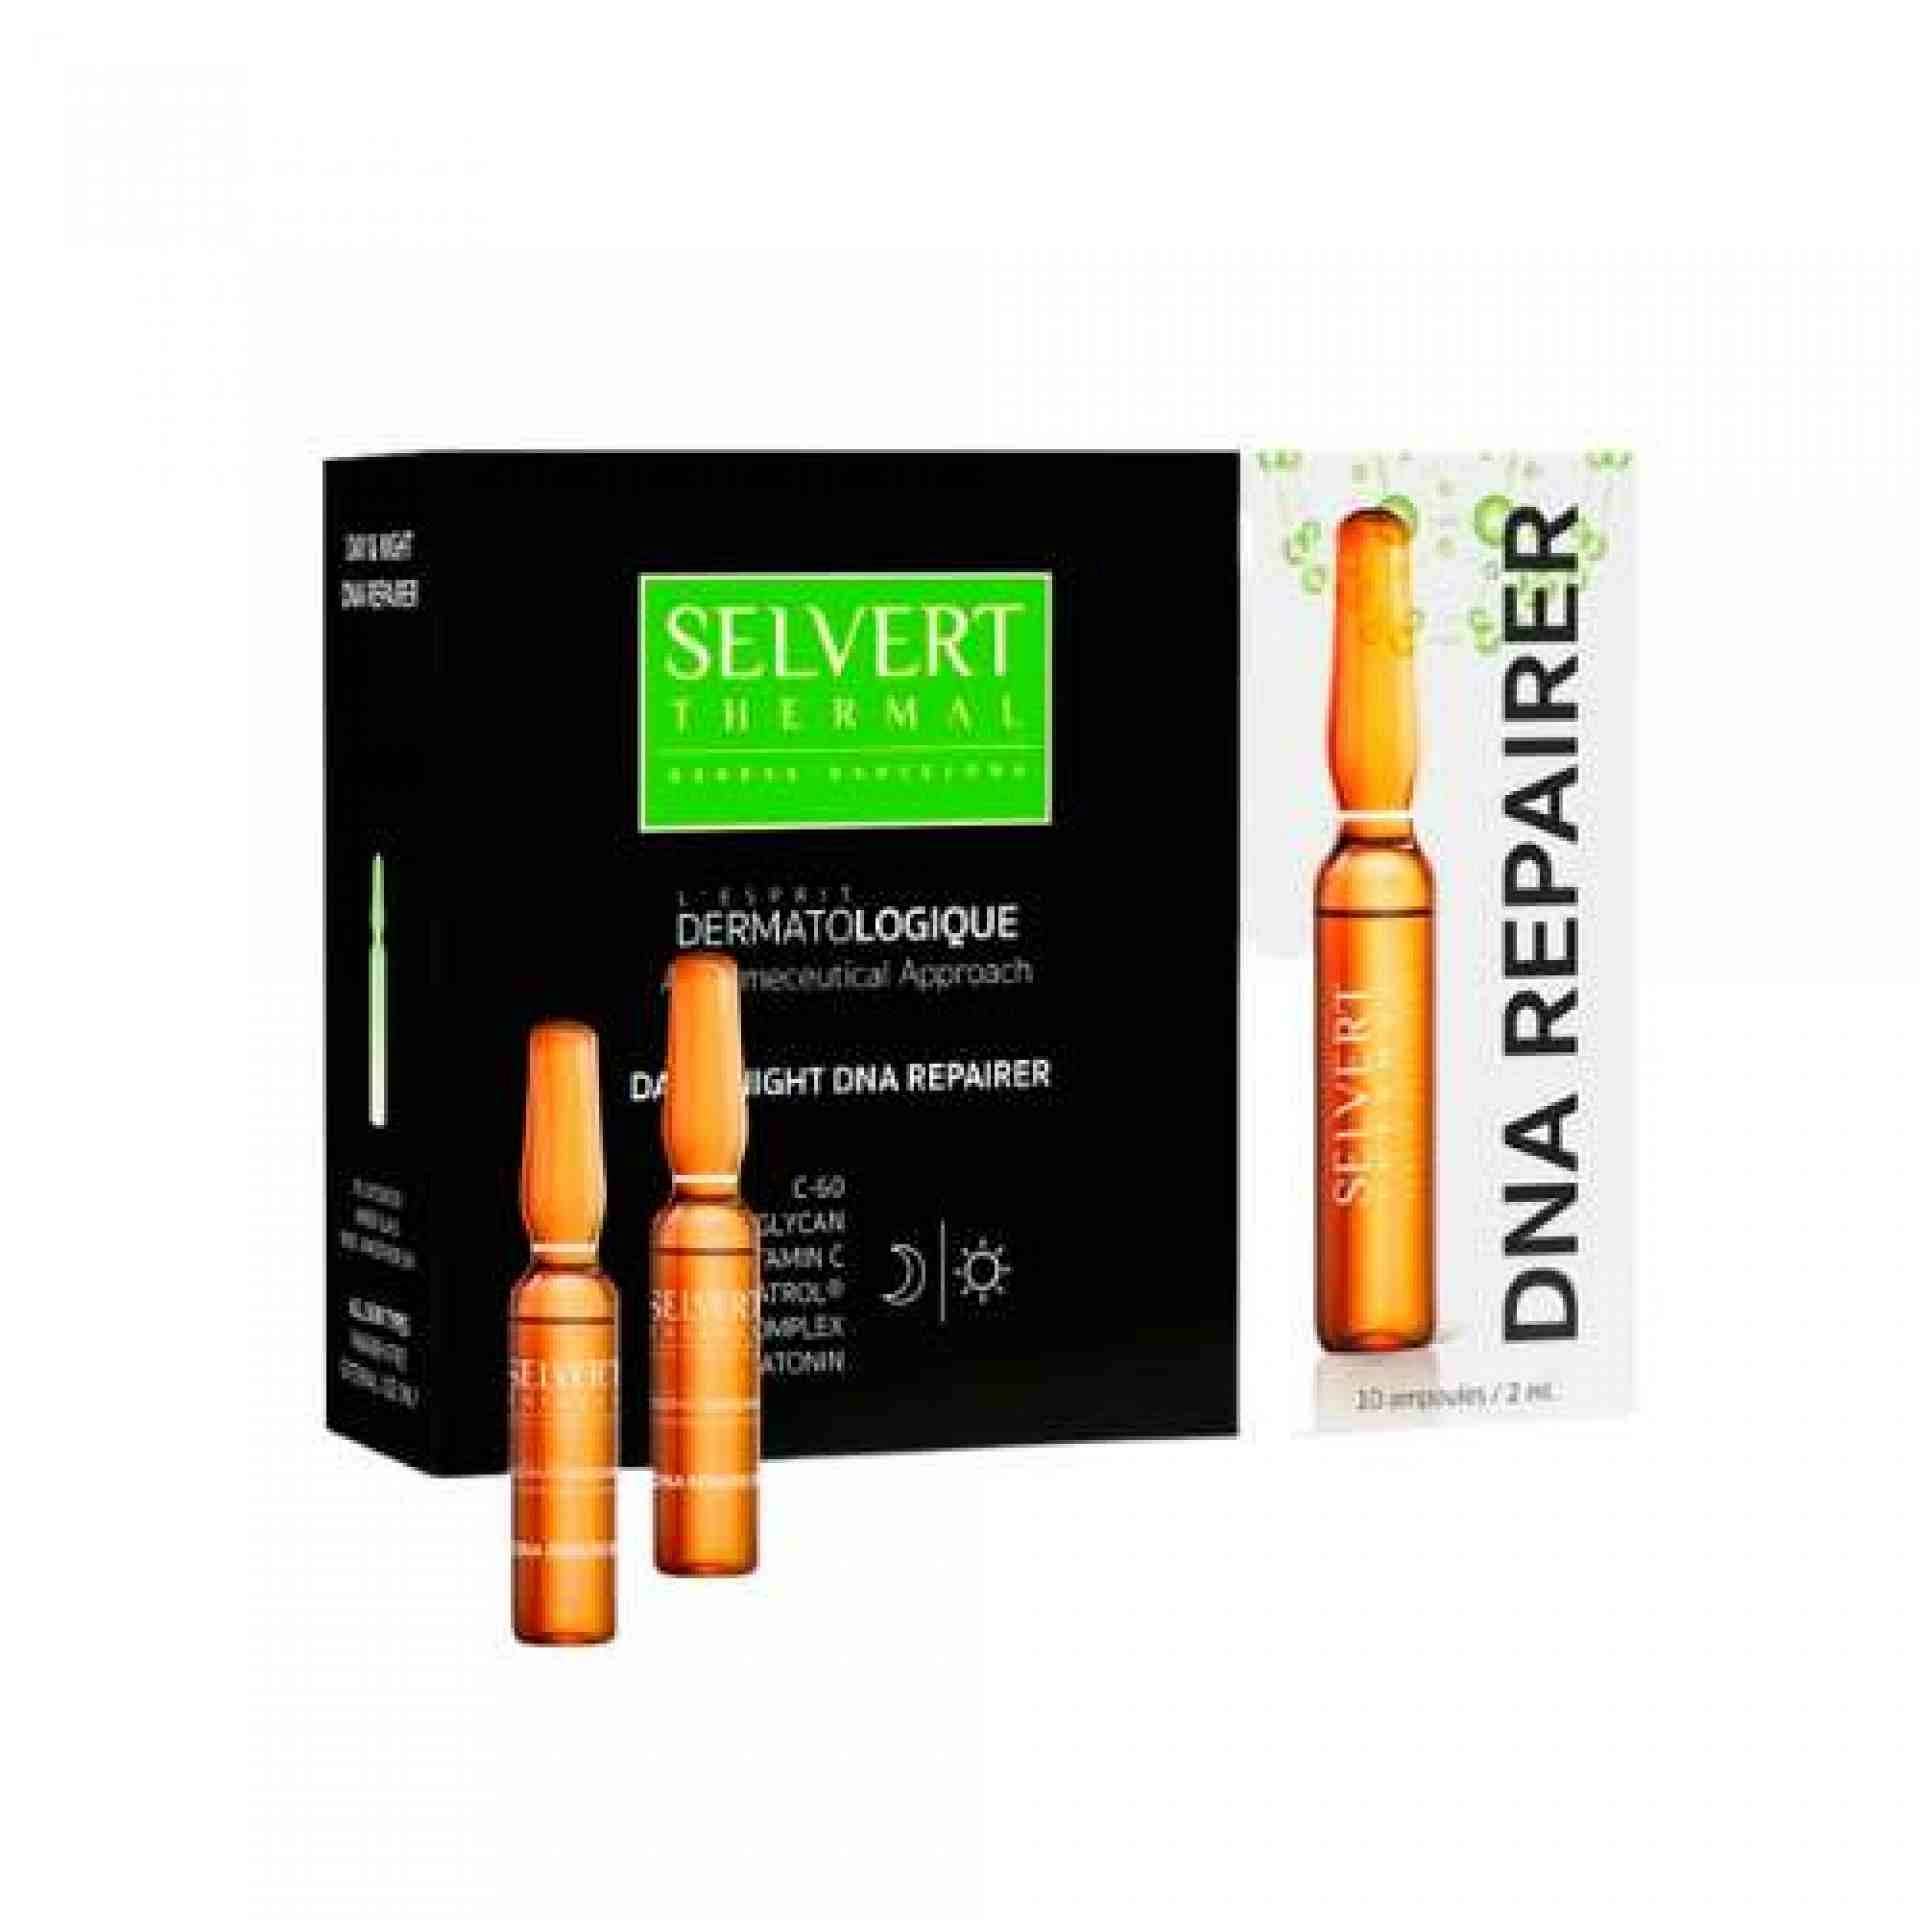 Day & Night DNA Repairer | Ampollas reparadoras 10x2ml - L´Esprit Dermatologique - Selvert Thermal ®